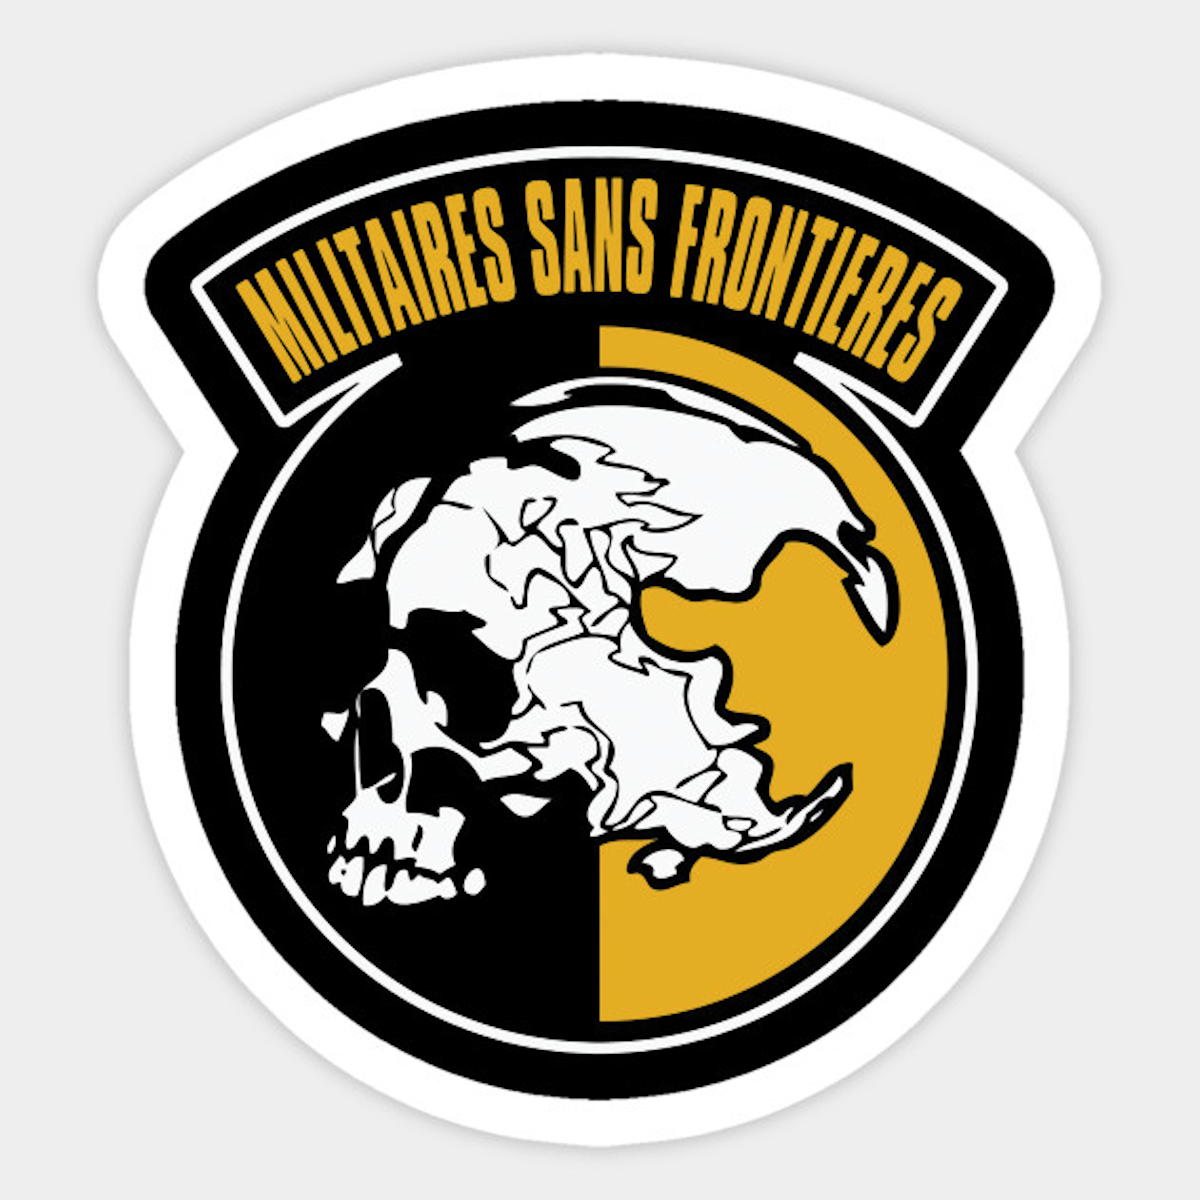 Metal Gear Solid - MSF (Militaires Sans Frontières)